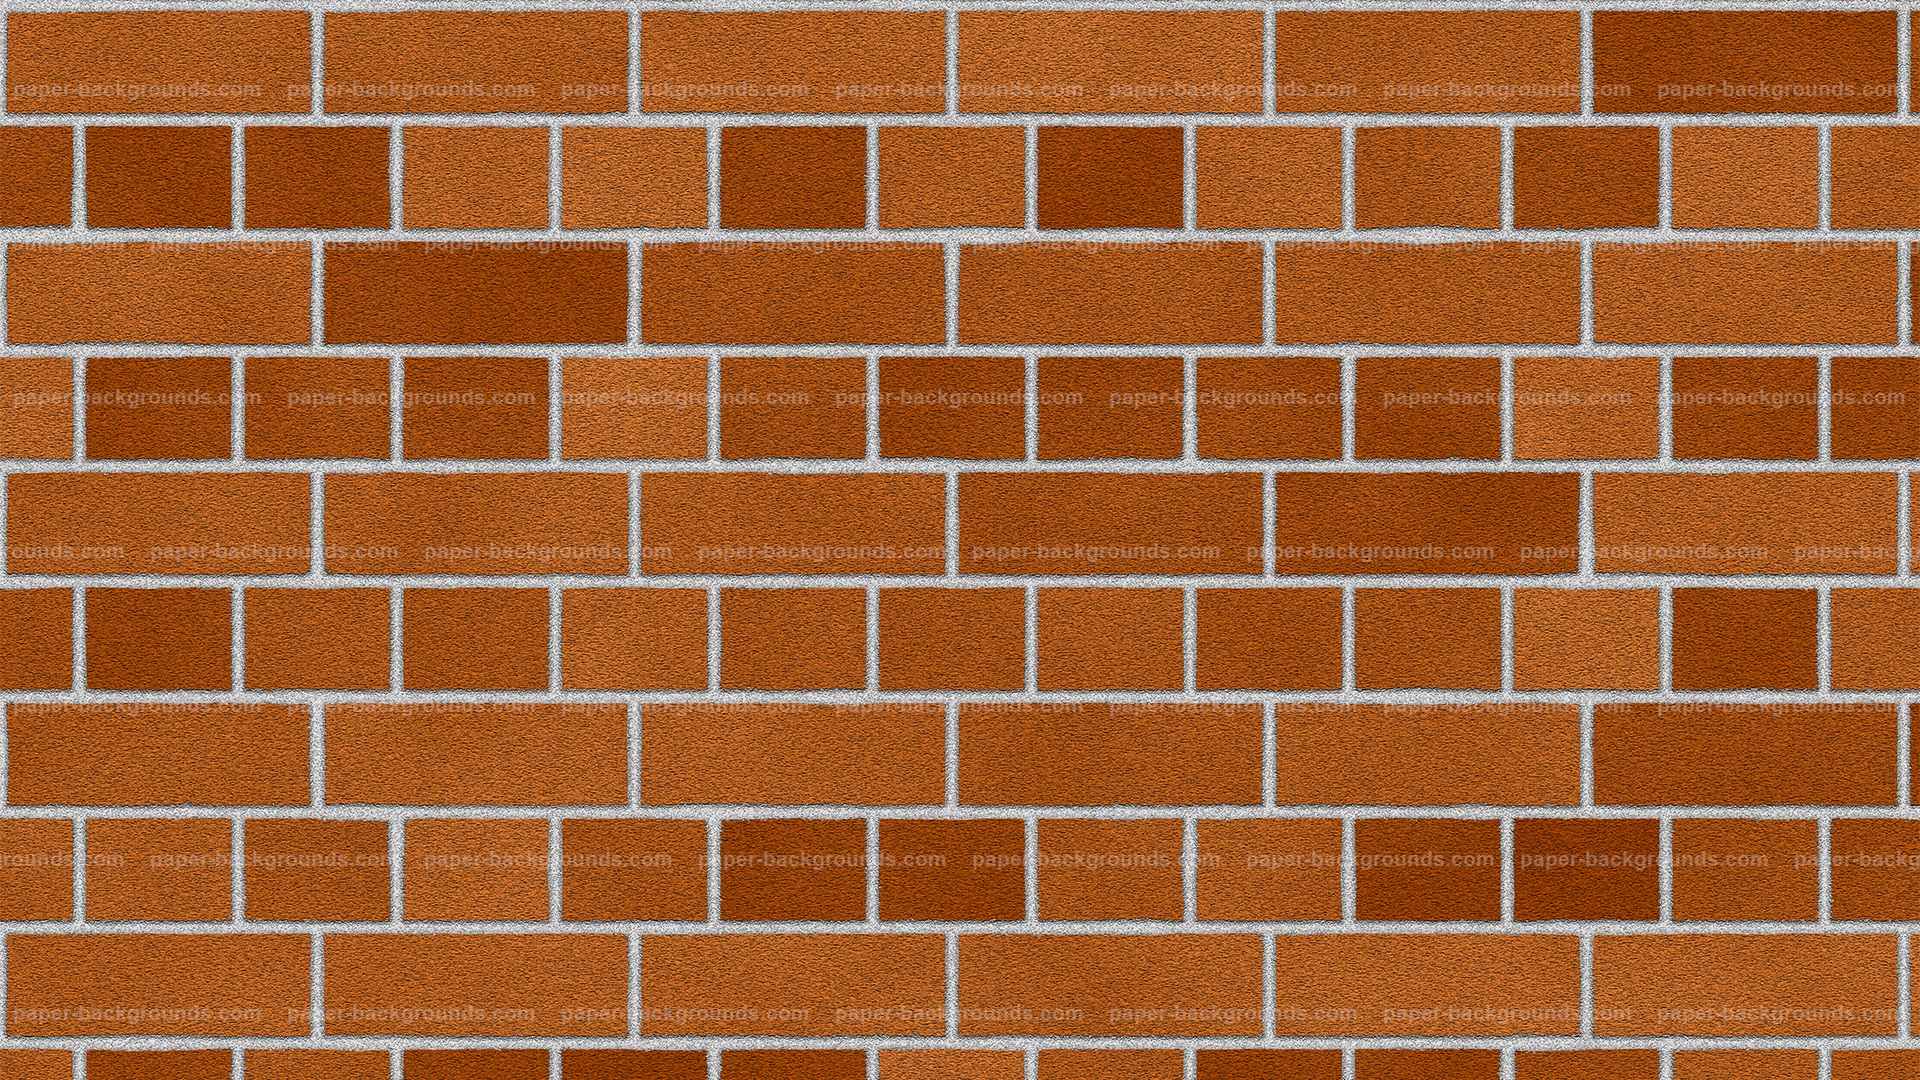 White Brick Wall Texture Houzz Textured Wallpaper